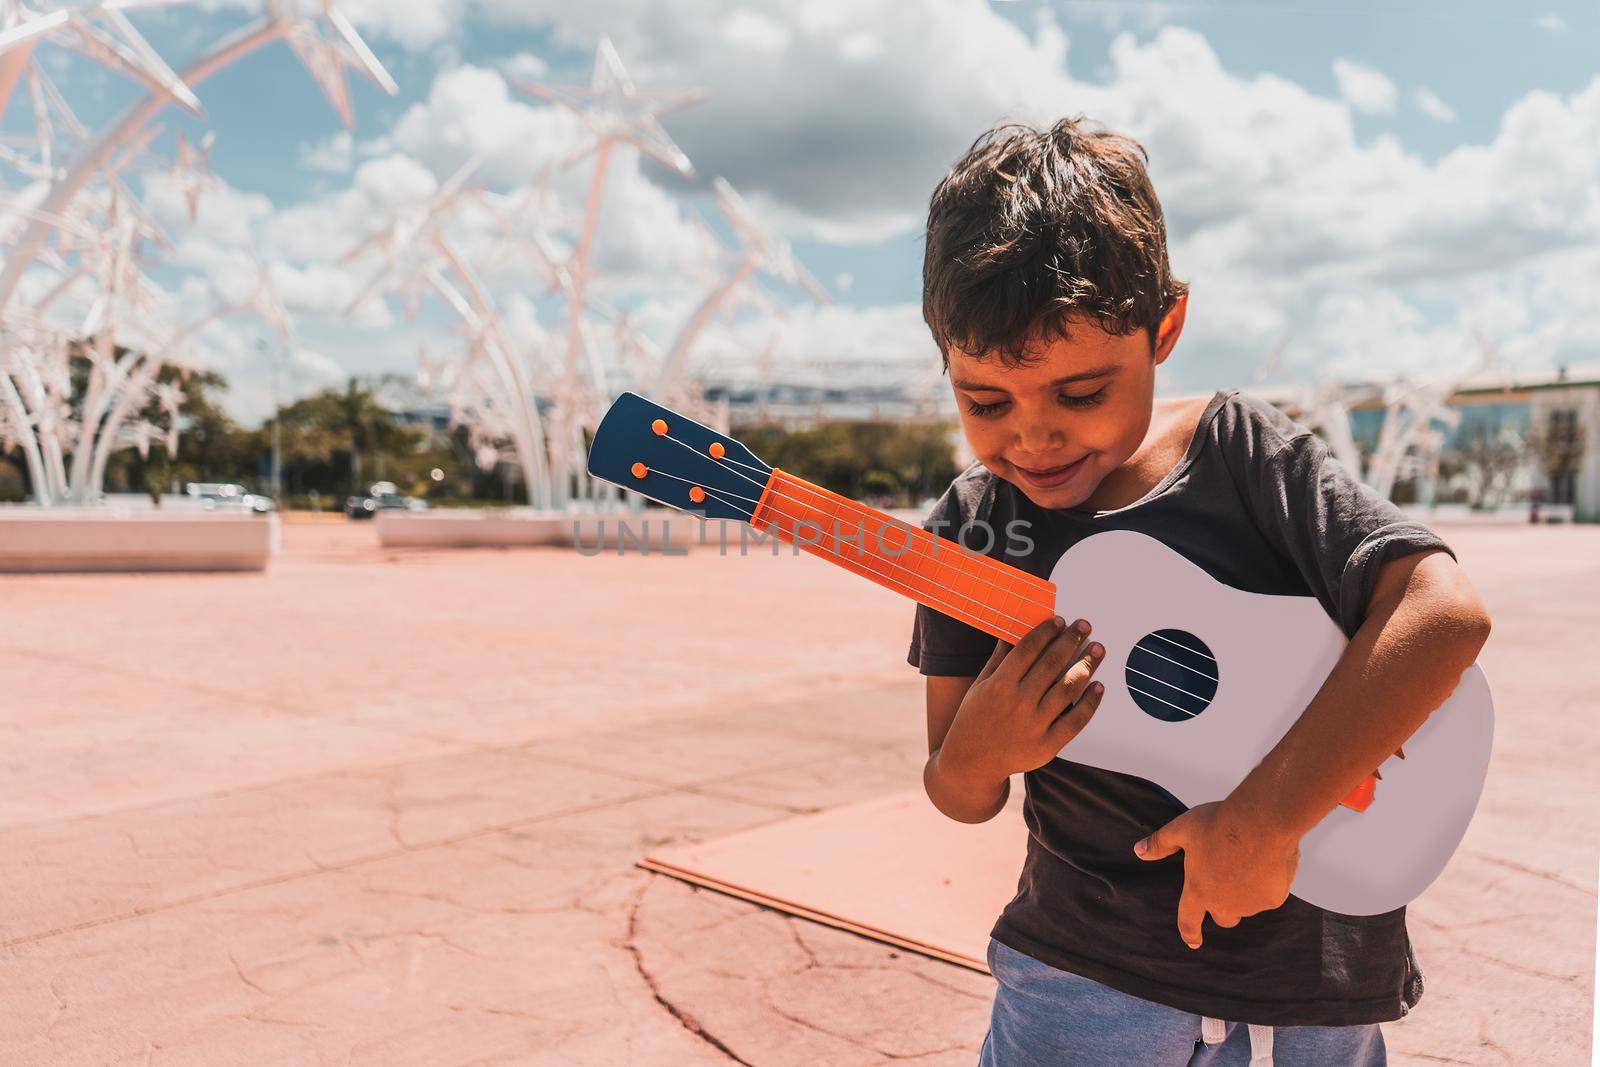 Moody photo of a Latino boy playing a ukulele in a public plaza by cfalvarez